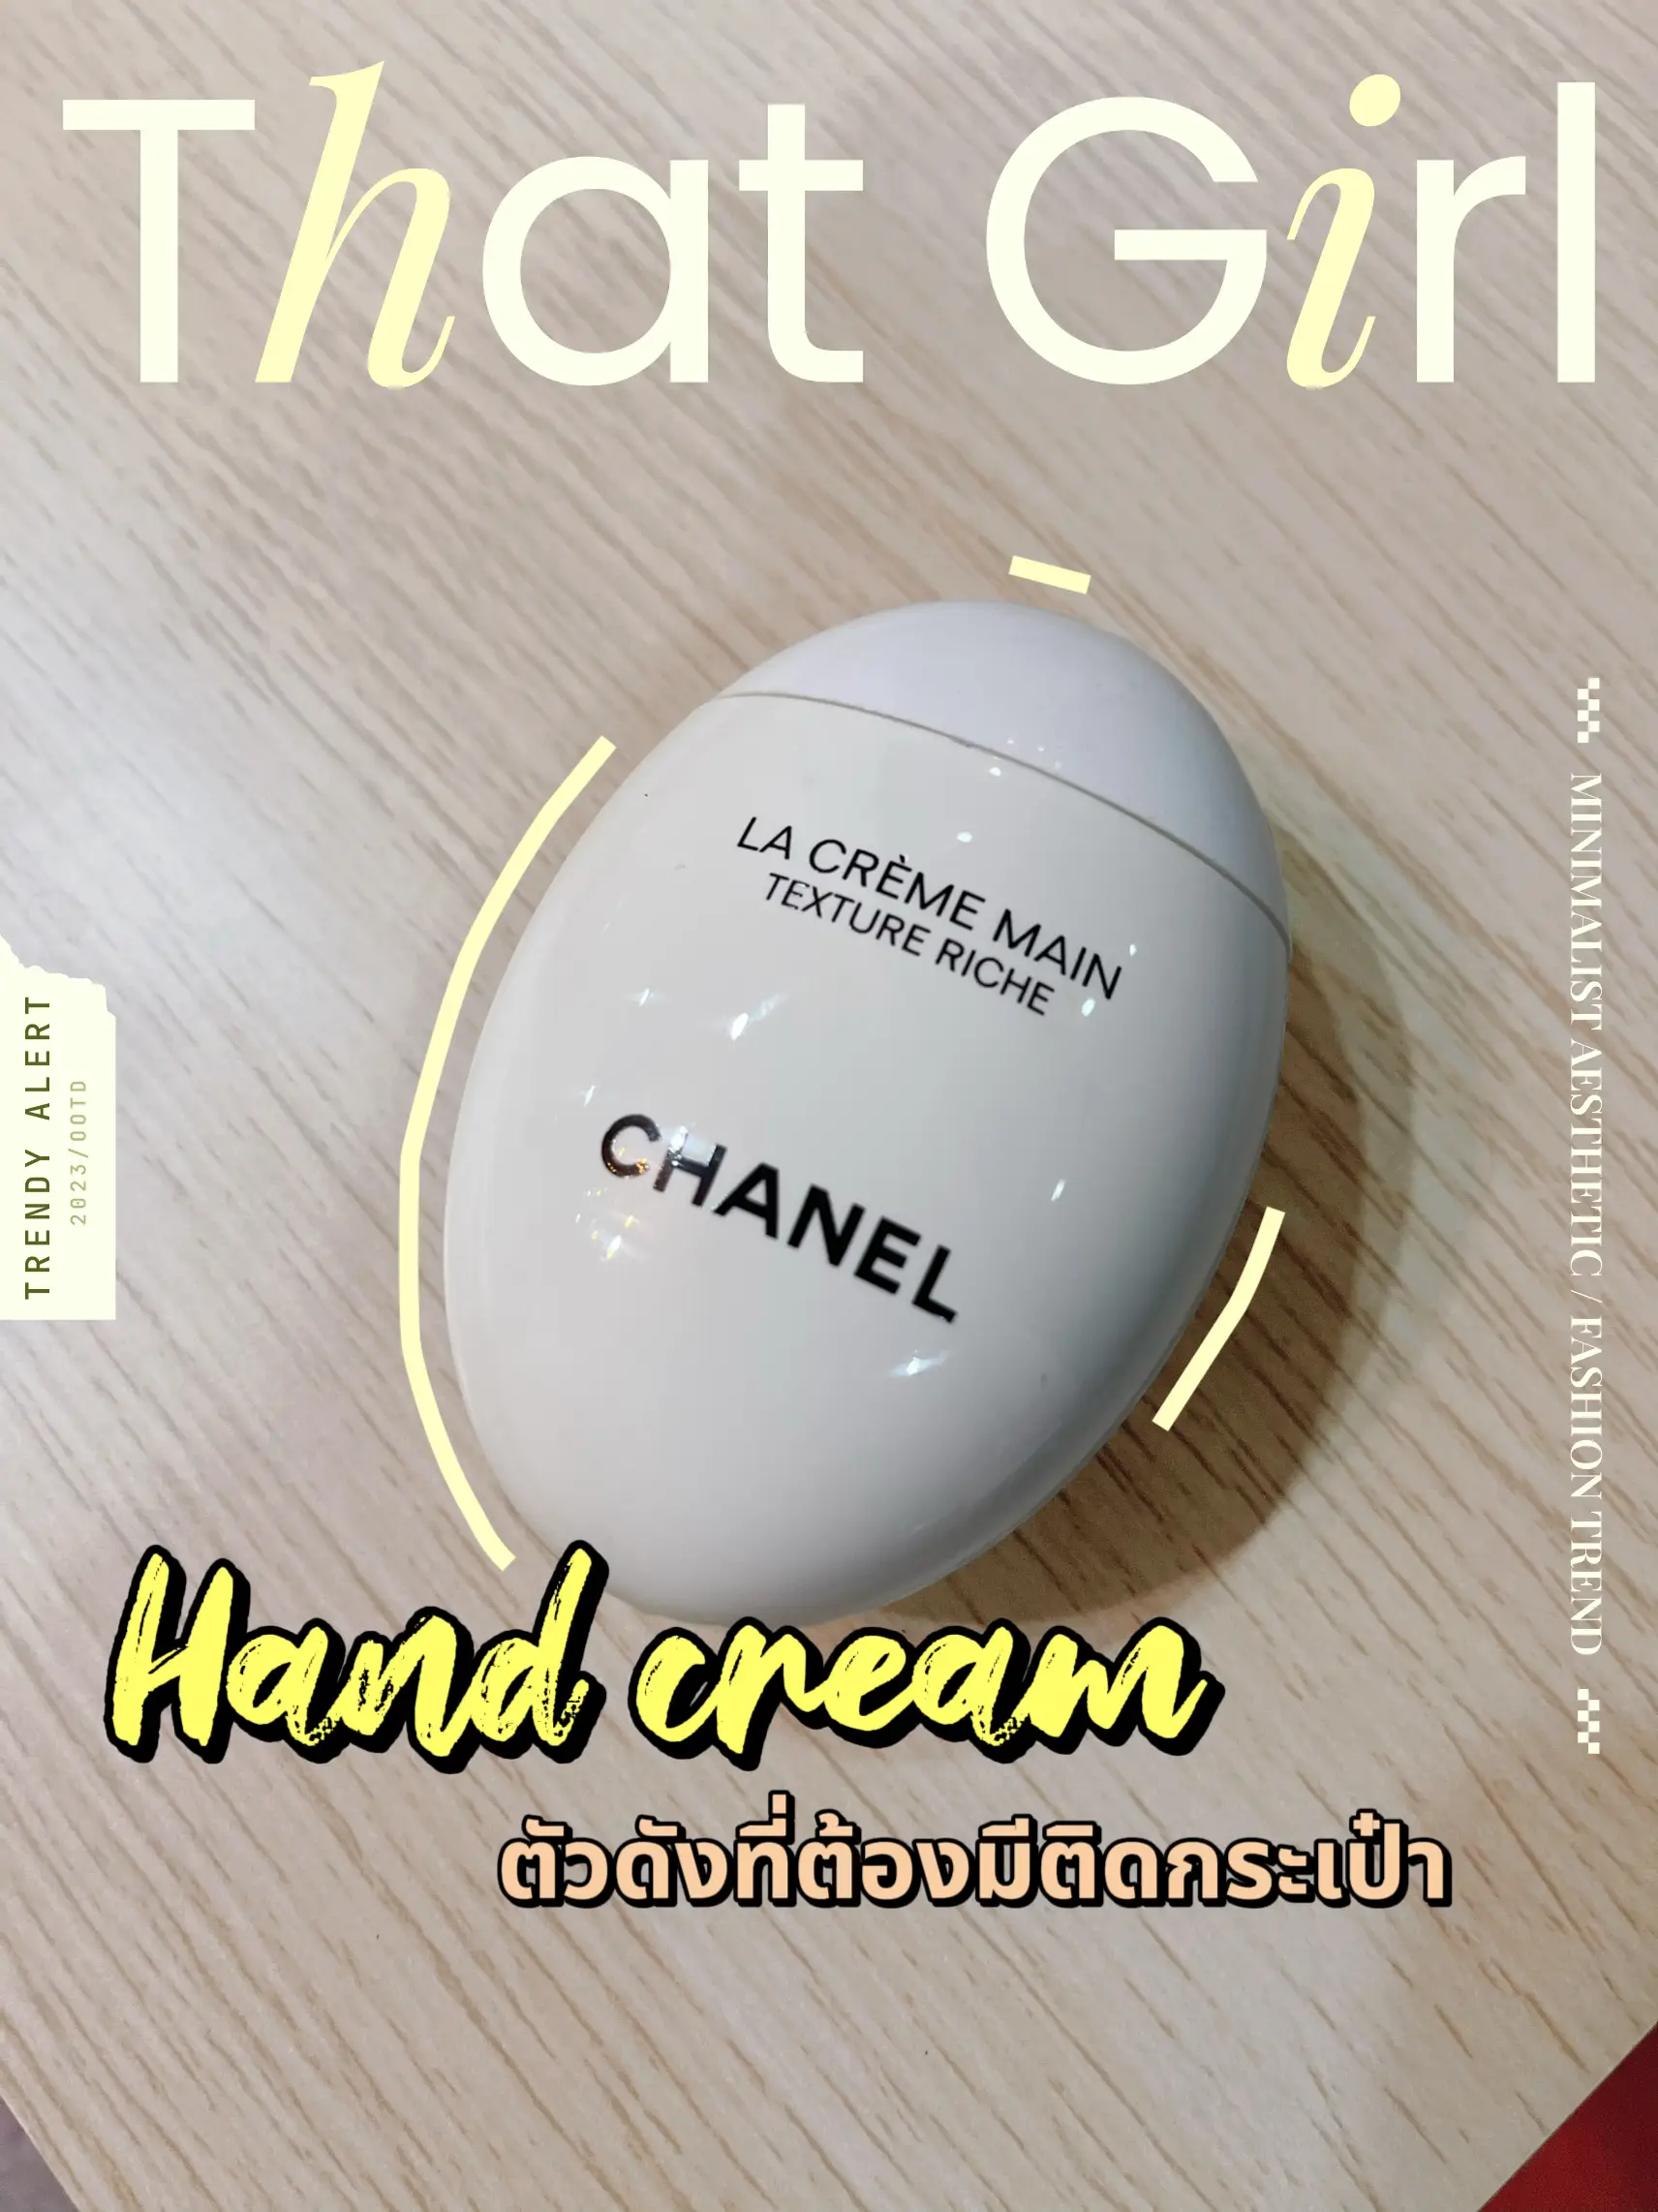 Hand cream น้องไข่ตัวดังของ Chanel, Gallery posted by Year